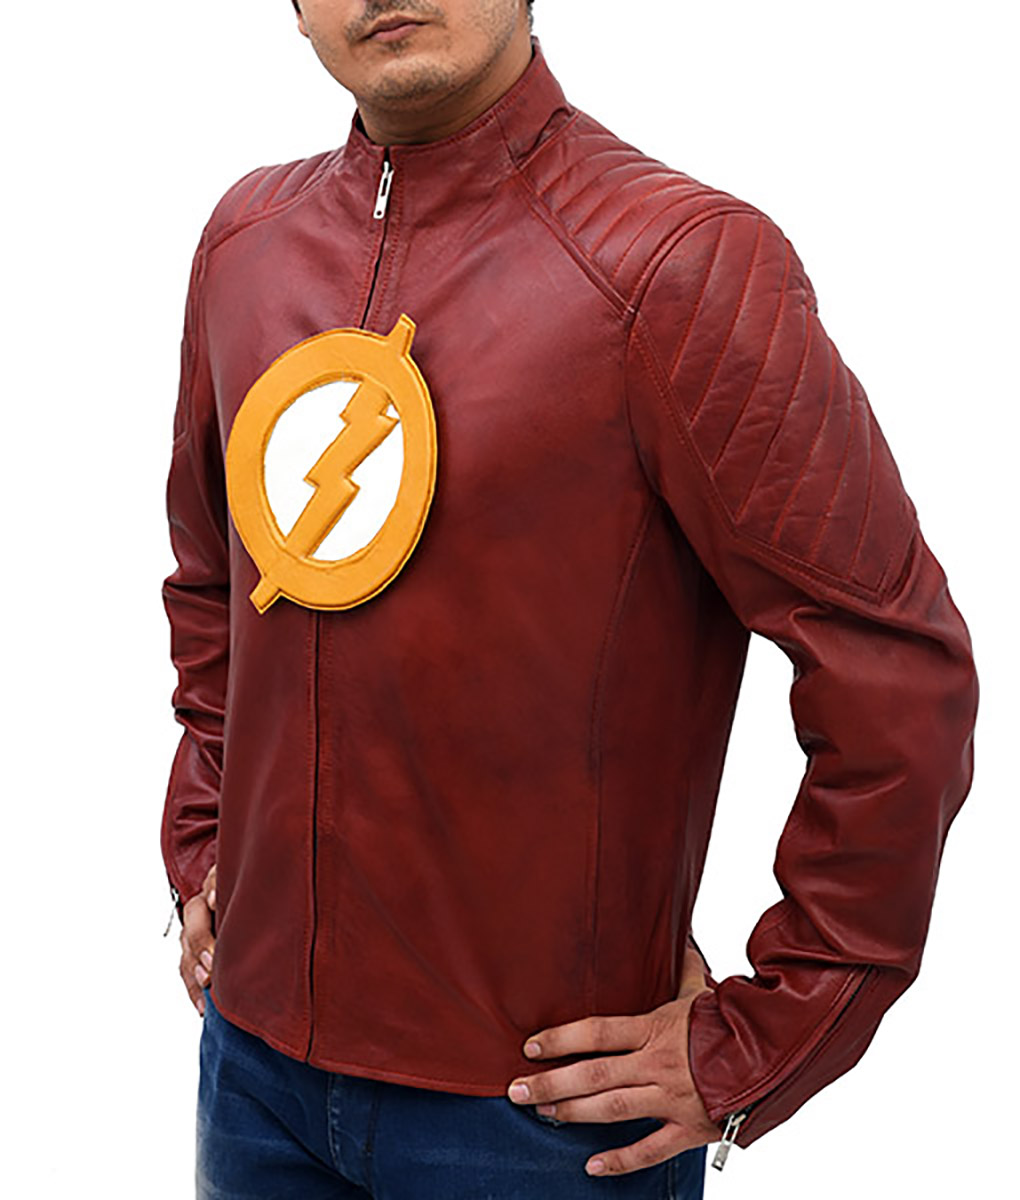 The Flash Season 2 Ezra Miller Leather Jacket